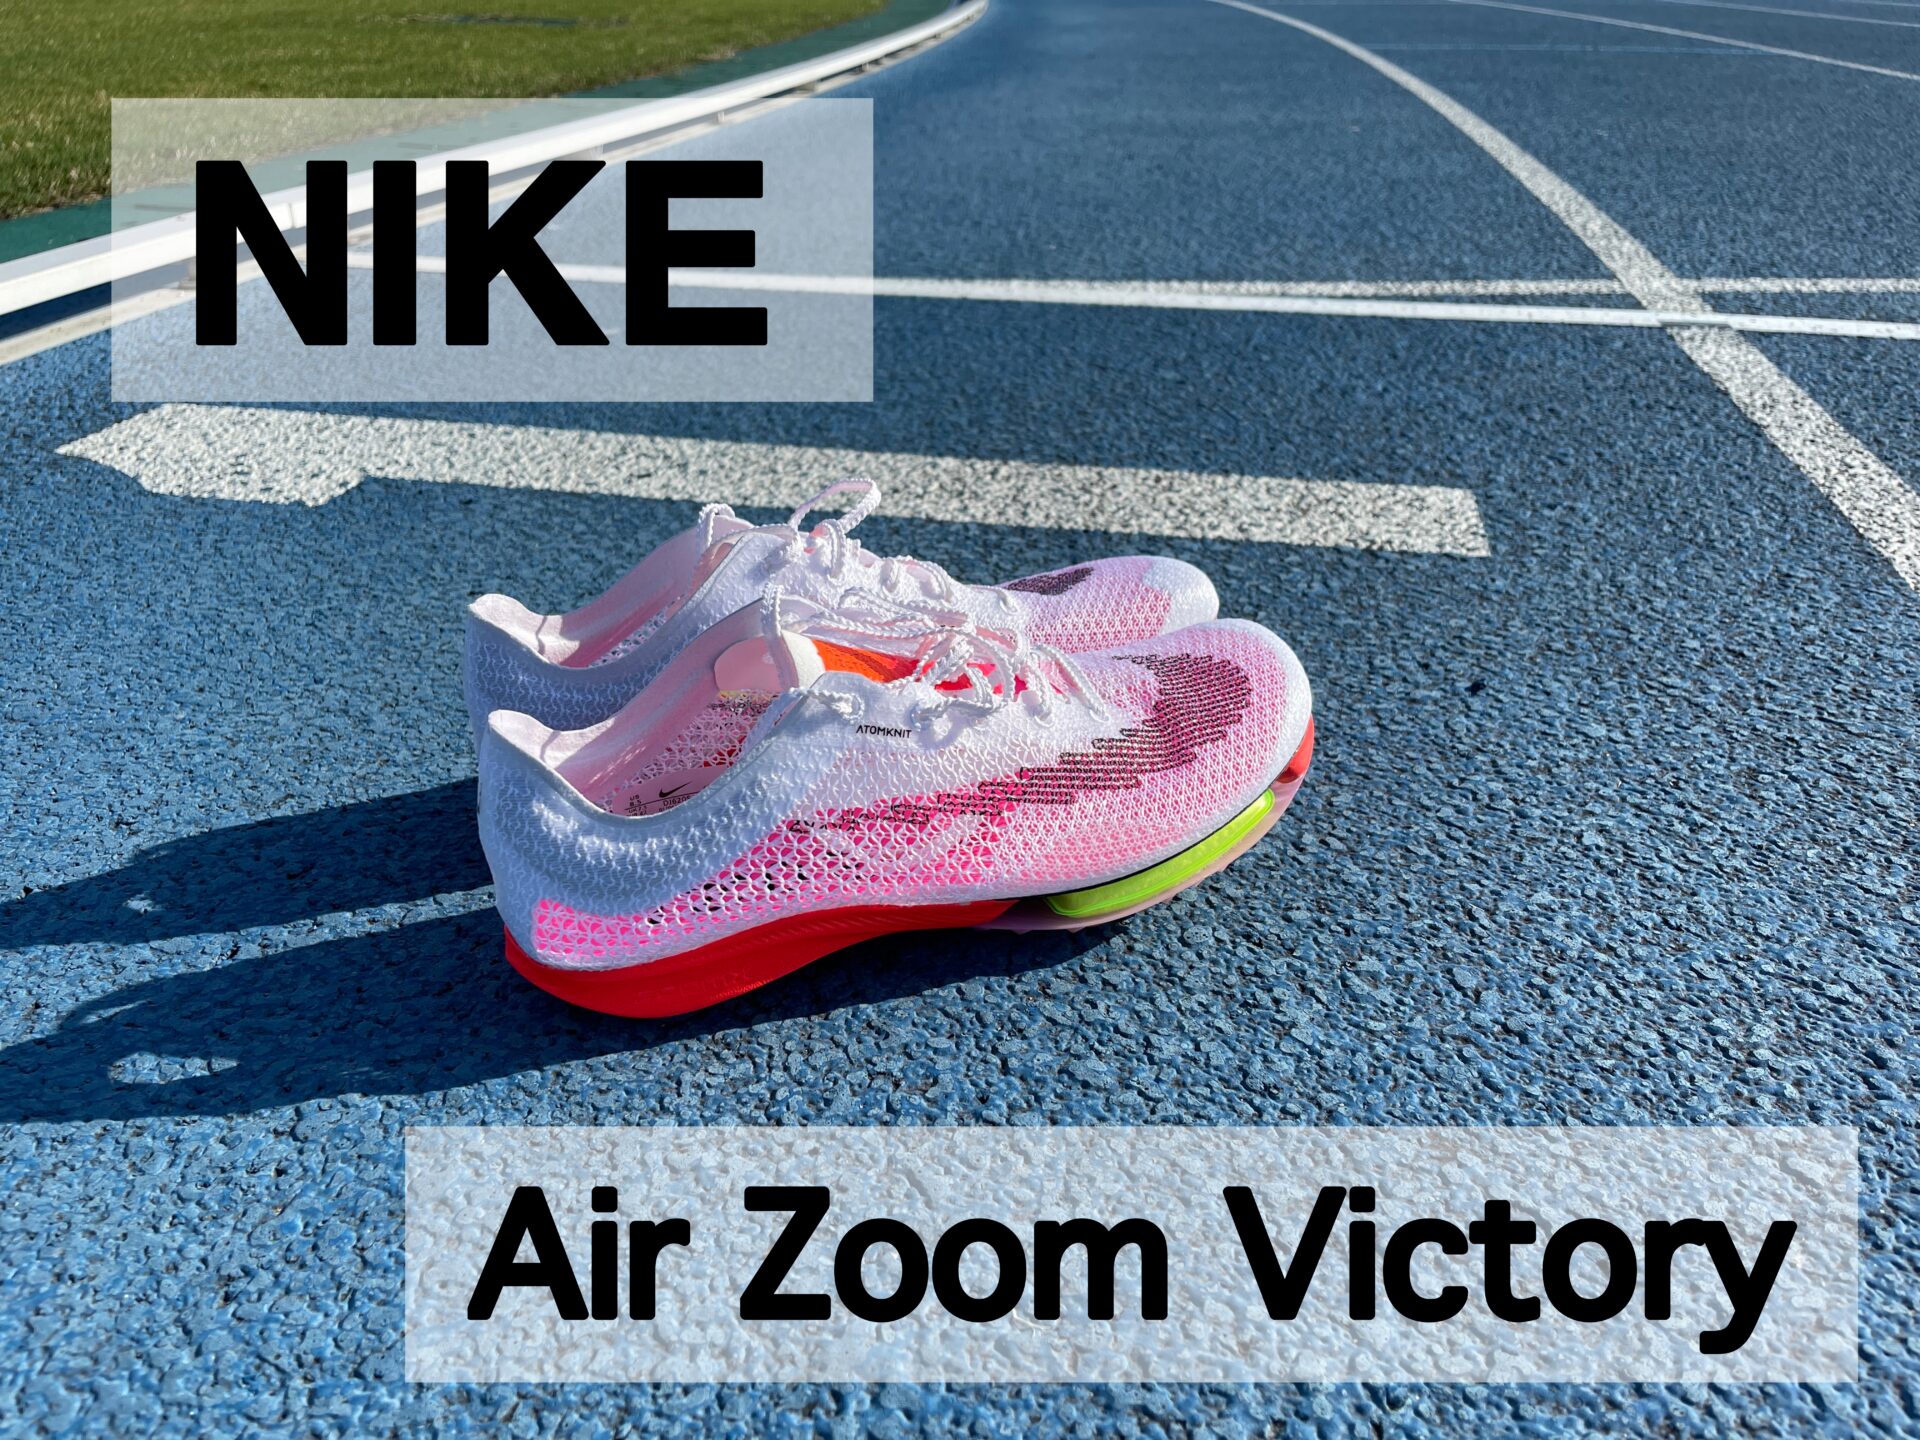 NIKE【Air Zoom Victory】レビュー｜パタシンブログ | patashinblog